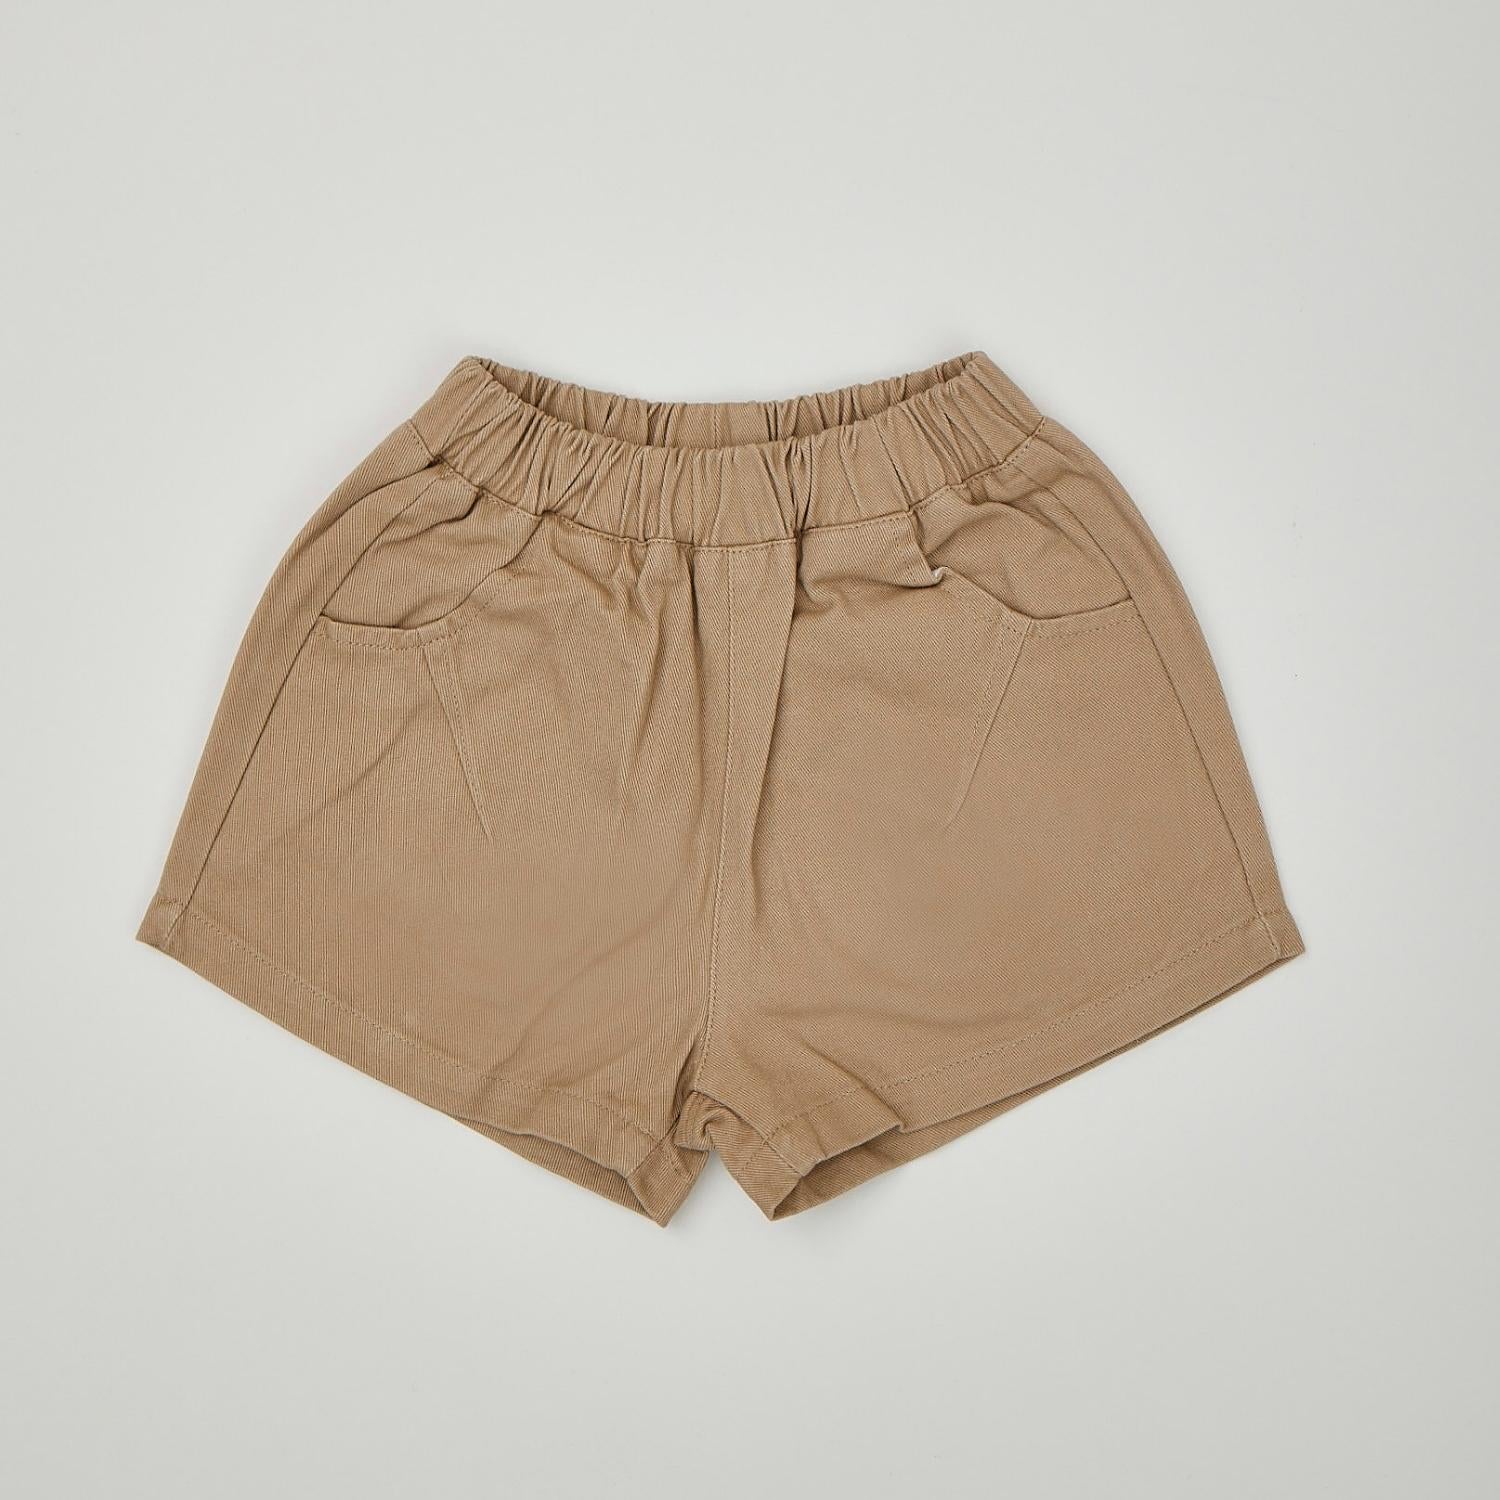 【Outlet】 Natural shorts